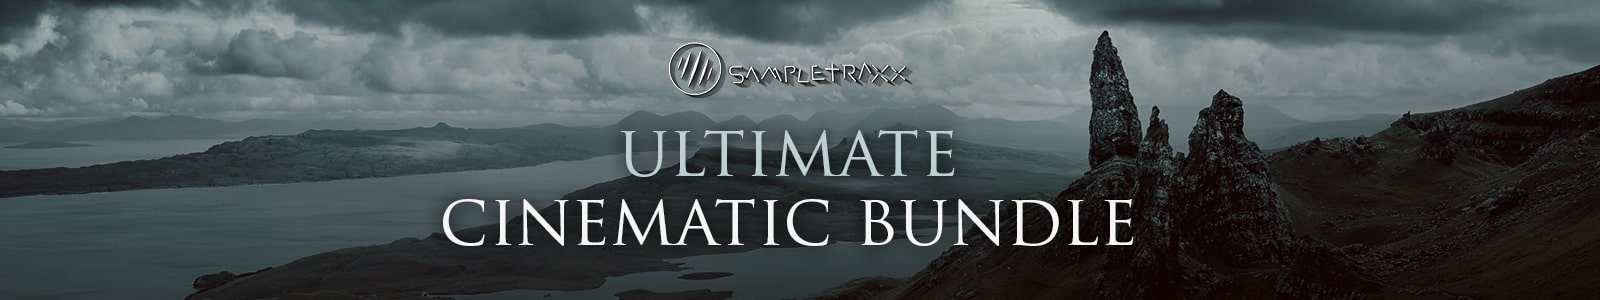 ultimate cinematic bundle